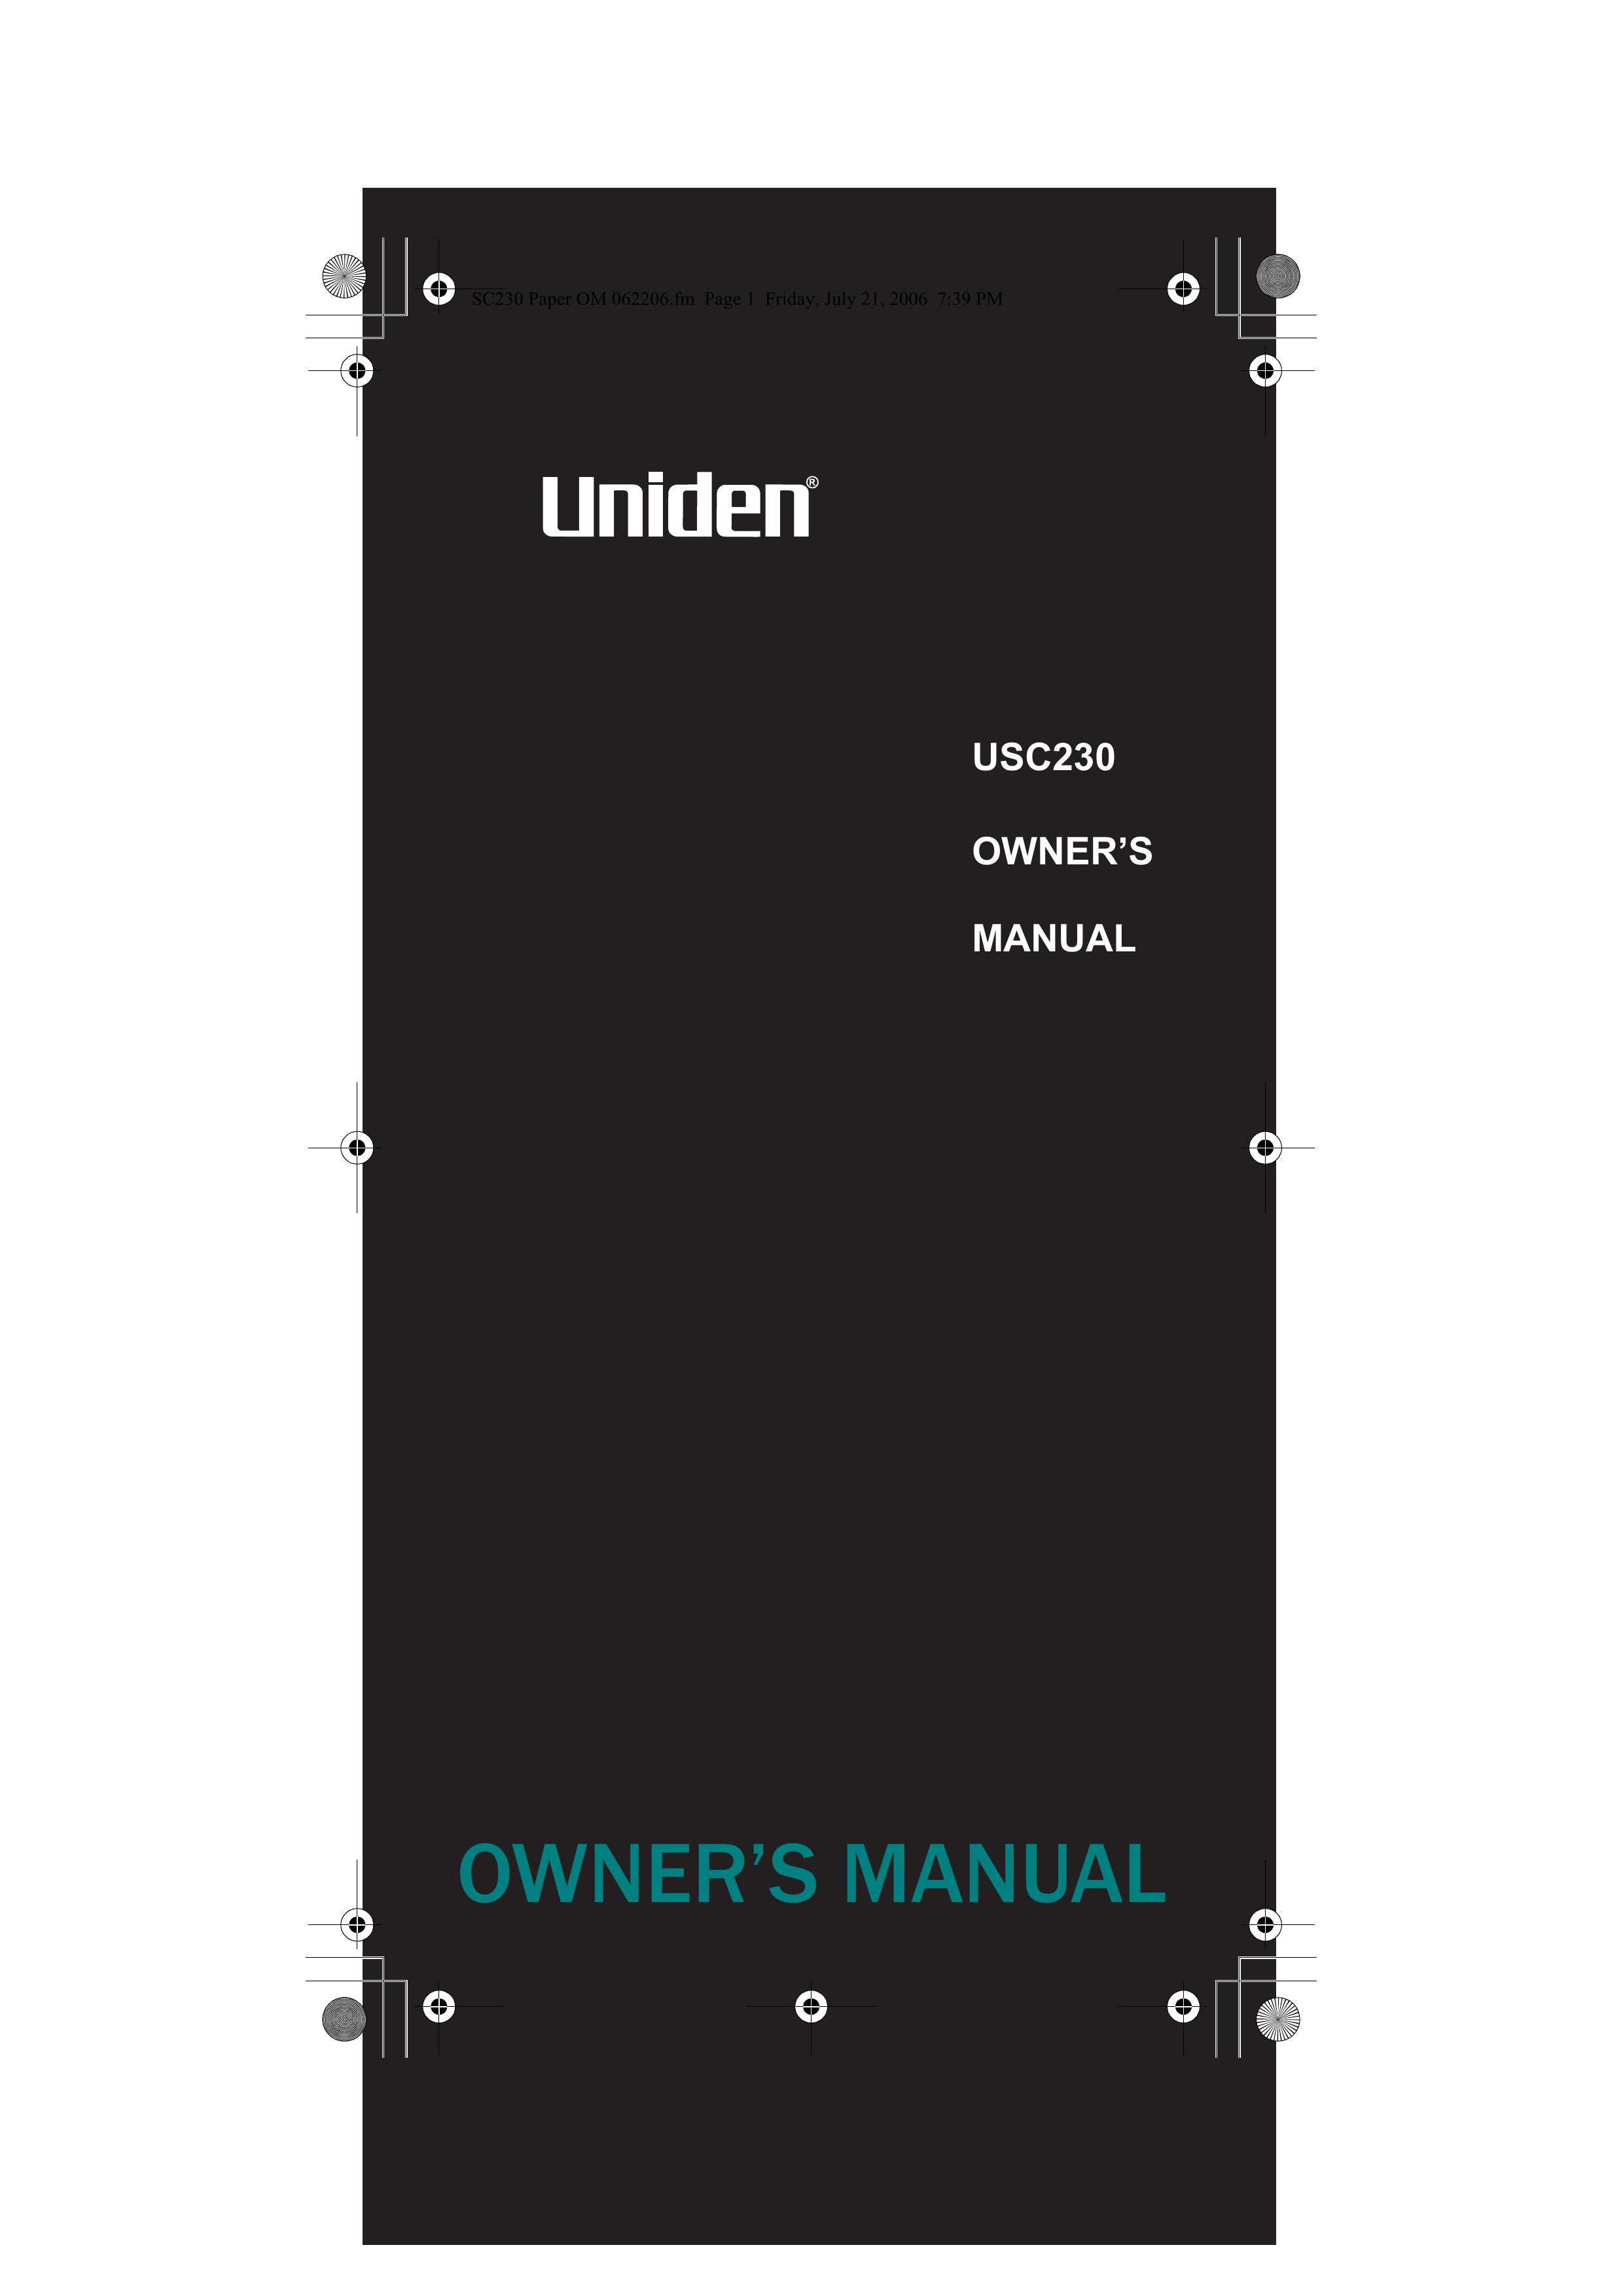 Uniden USC230 Photo Scanner User Manual